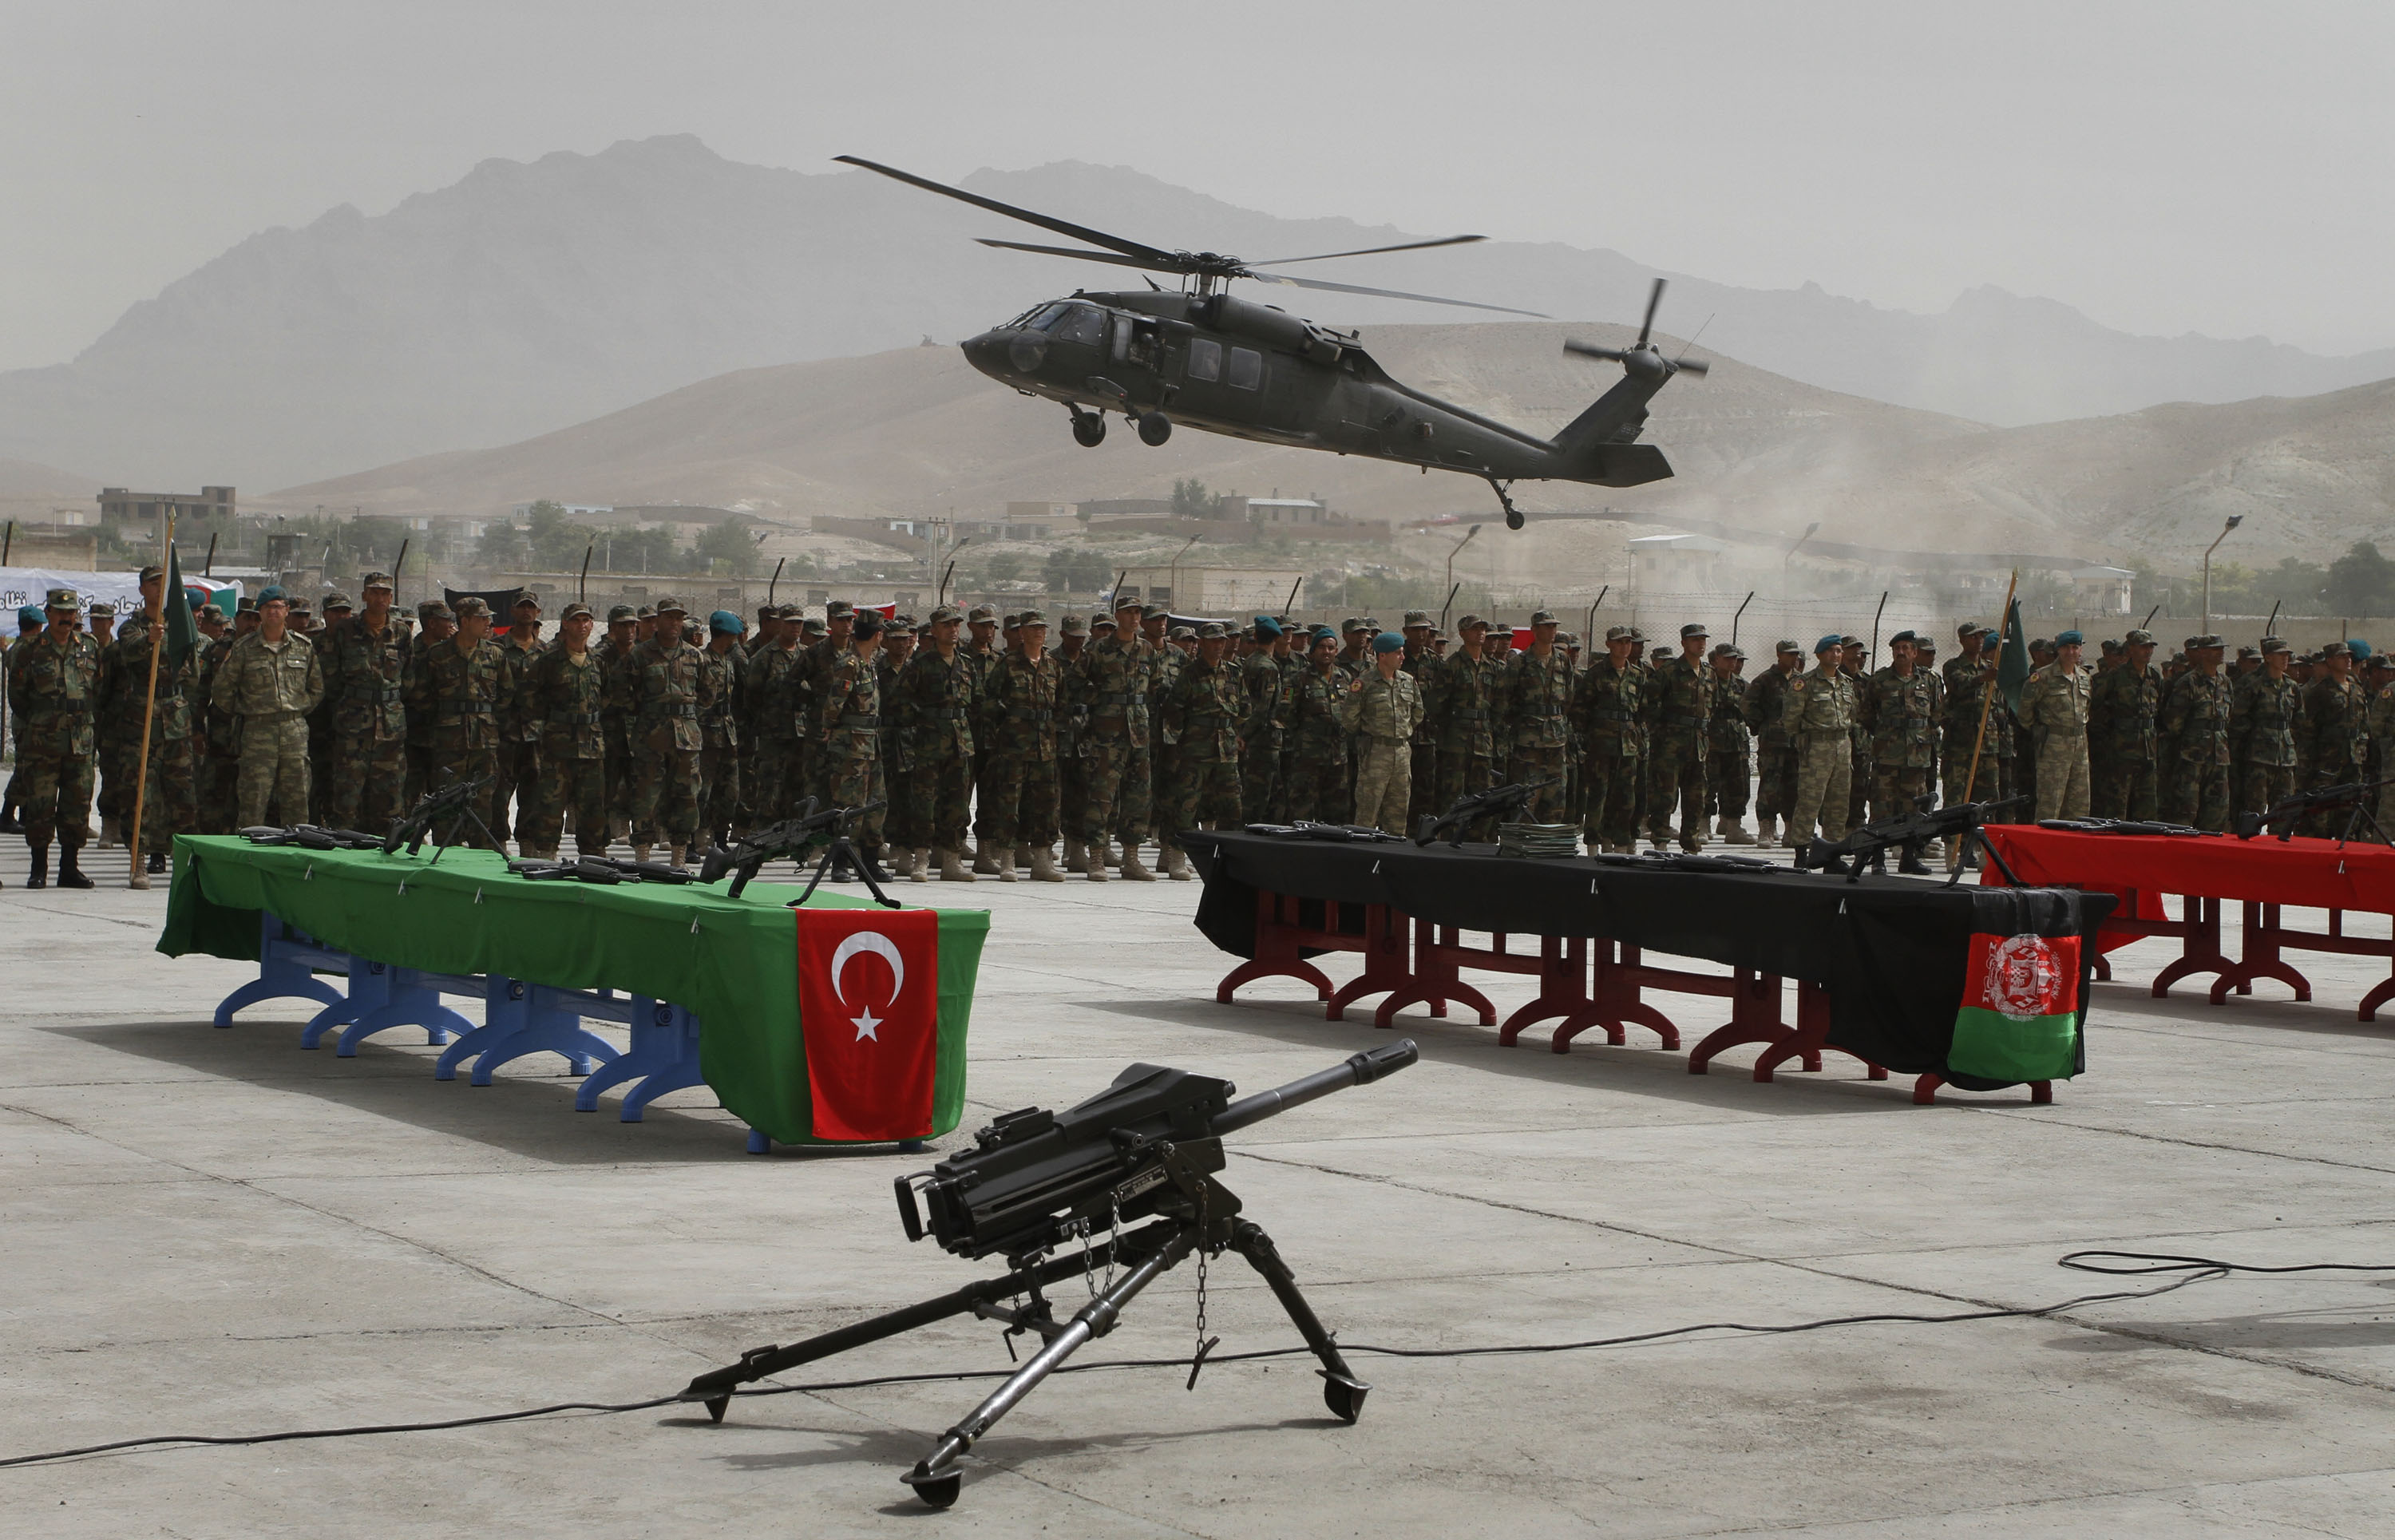 Afghanistan, ISAF, helikopter, Soldat, Olycka, Brott och straff, Krig